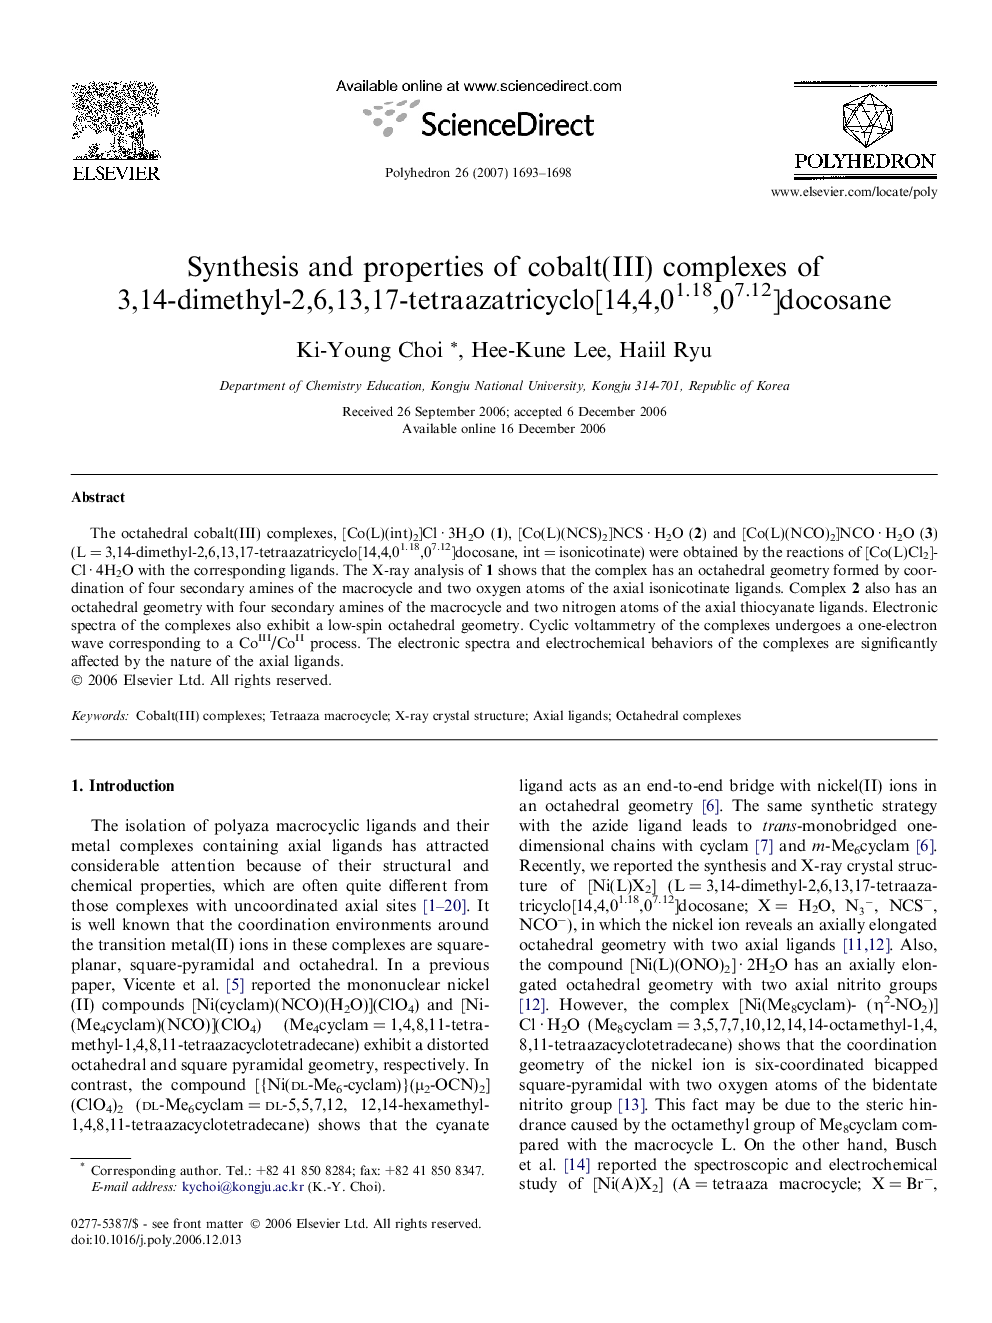 Synthesis and properties of cobalt(III) complexes of 3,14-dimethyl-2,6,13,17-tetraazatricyclo[14,4,01.18,07.12]docosane